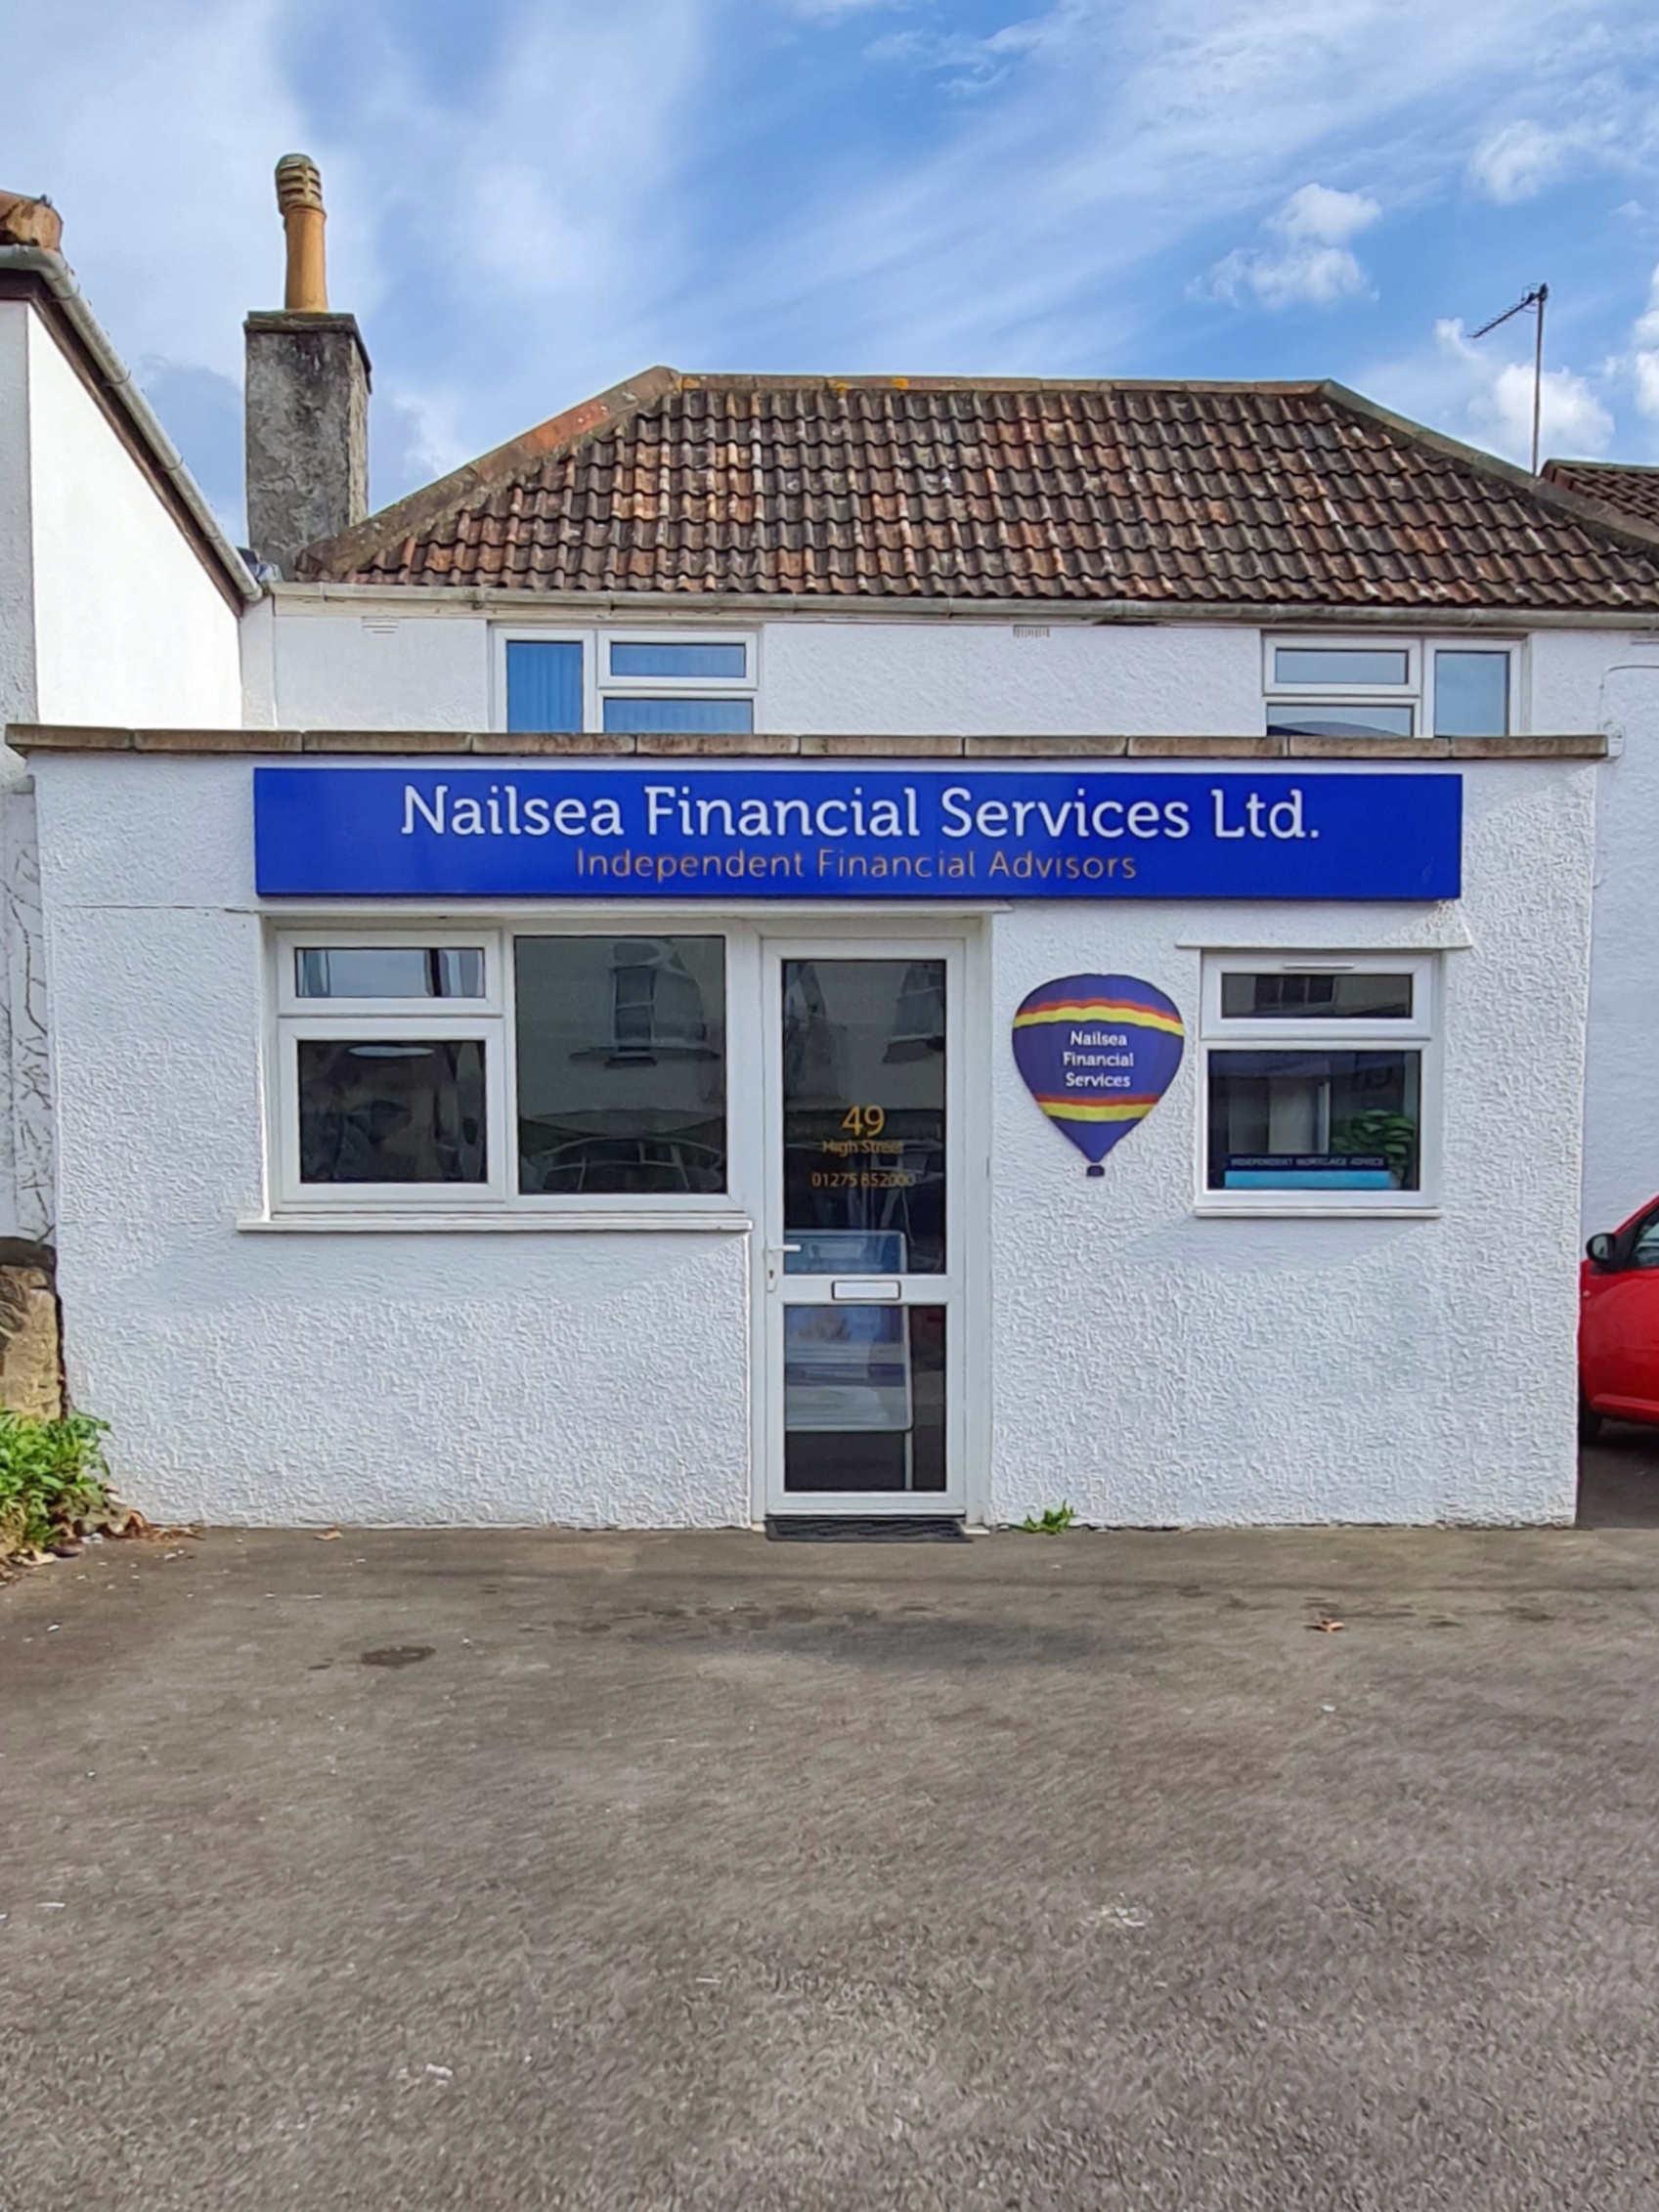 Nailsea Financial Services Ltd